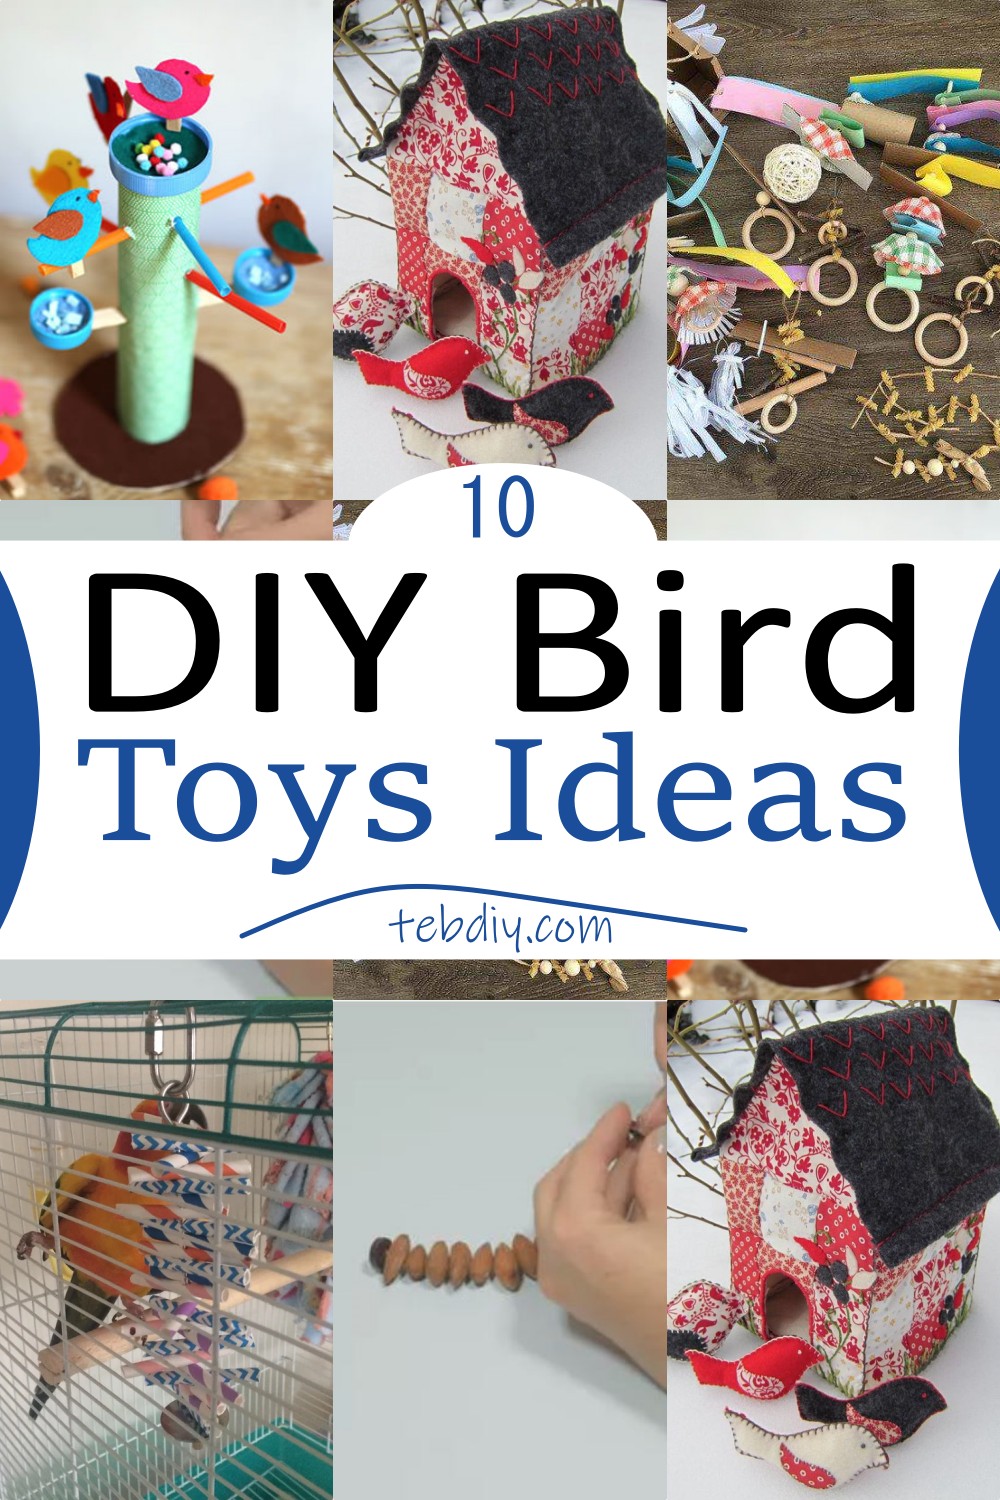 10 DIY Bird Toys Ideas